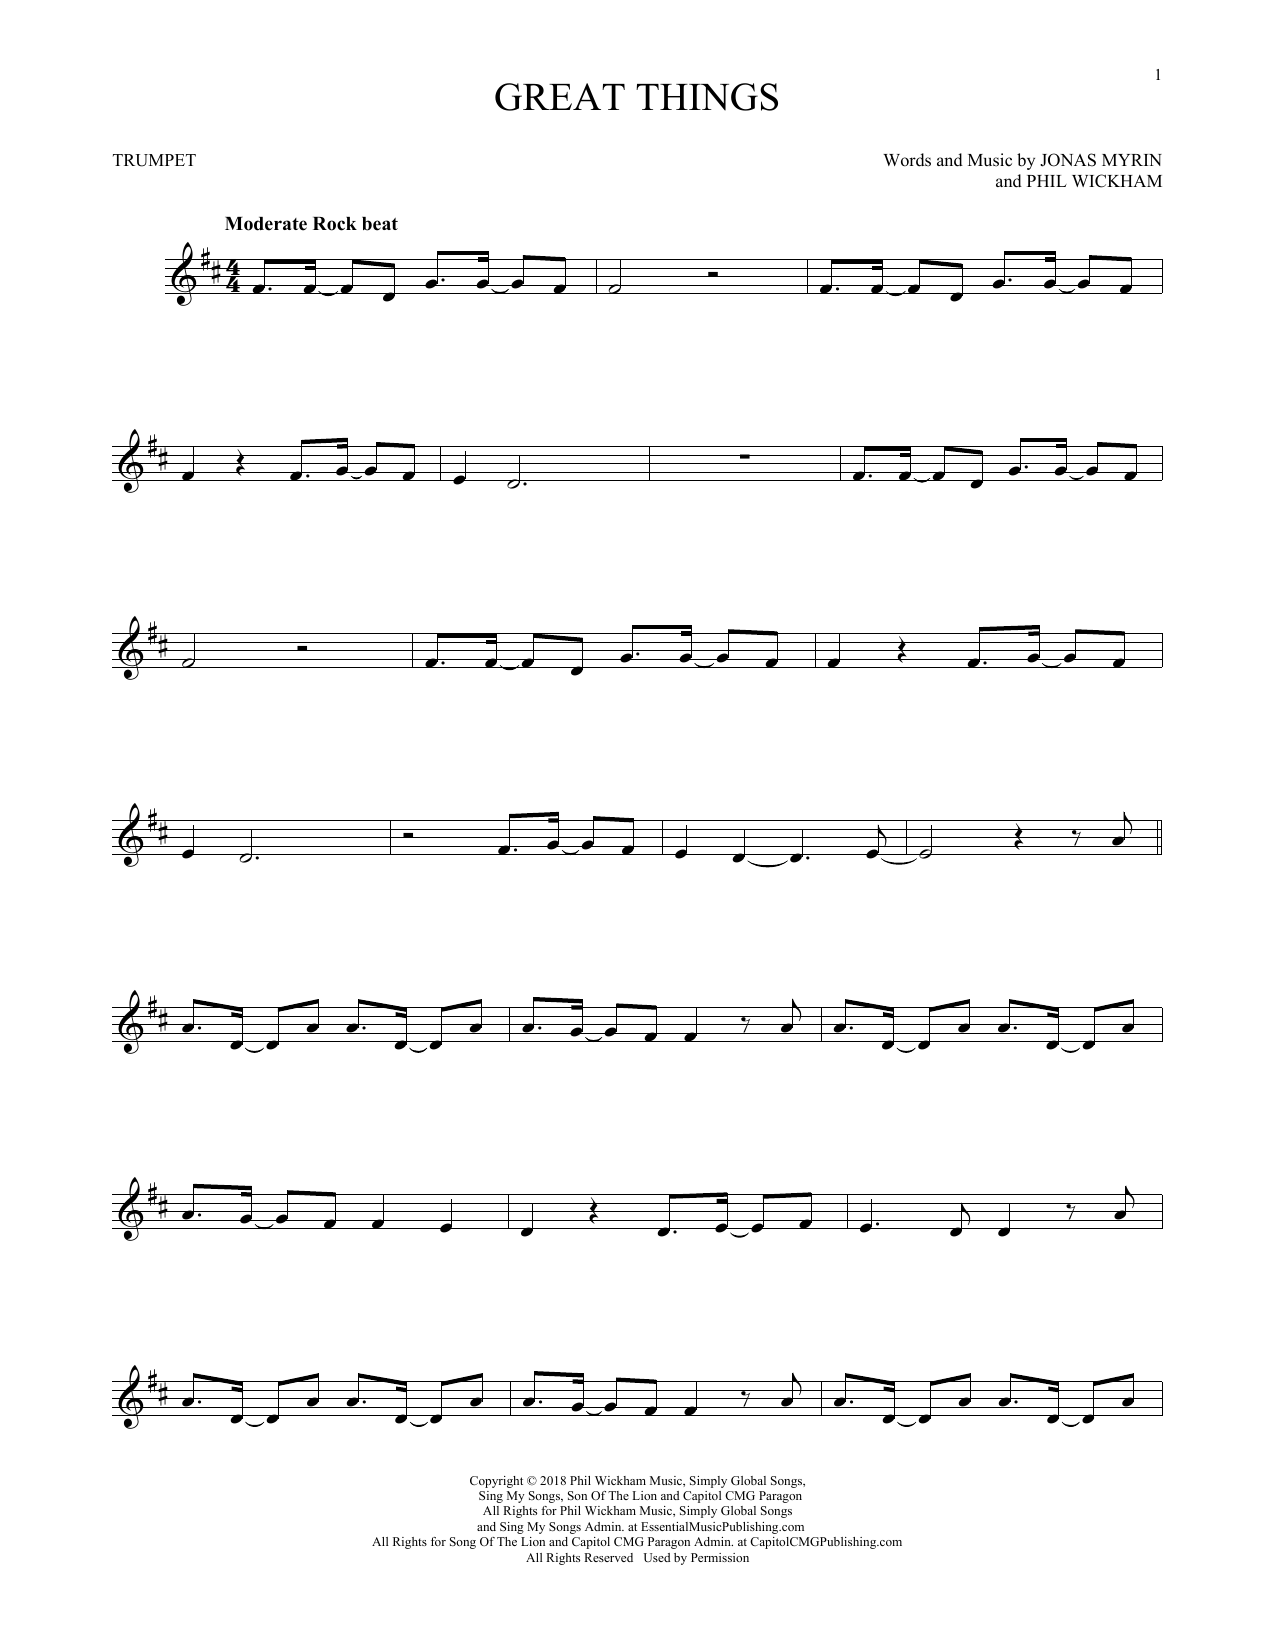 Phil Wickham Great Things sheet music notes printable PDF score